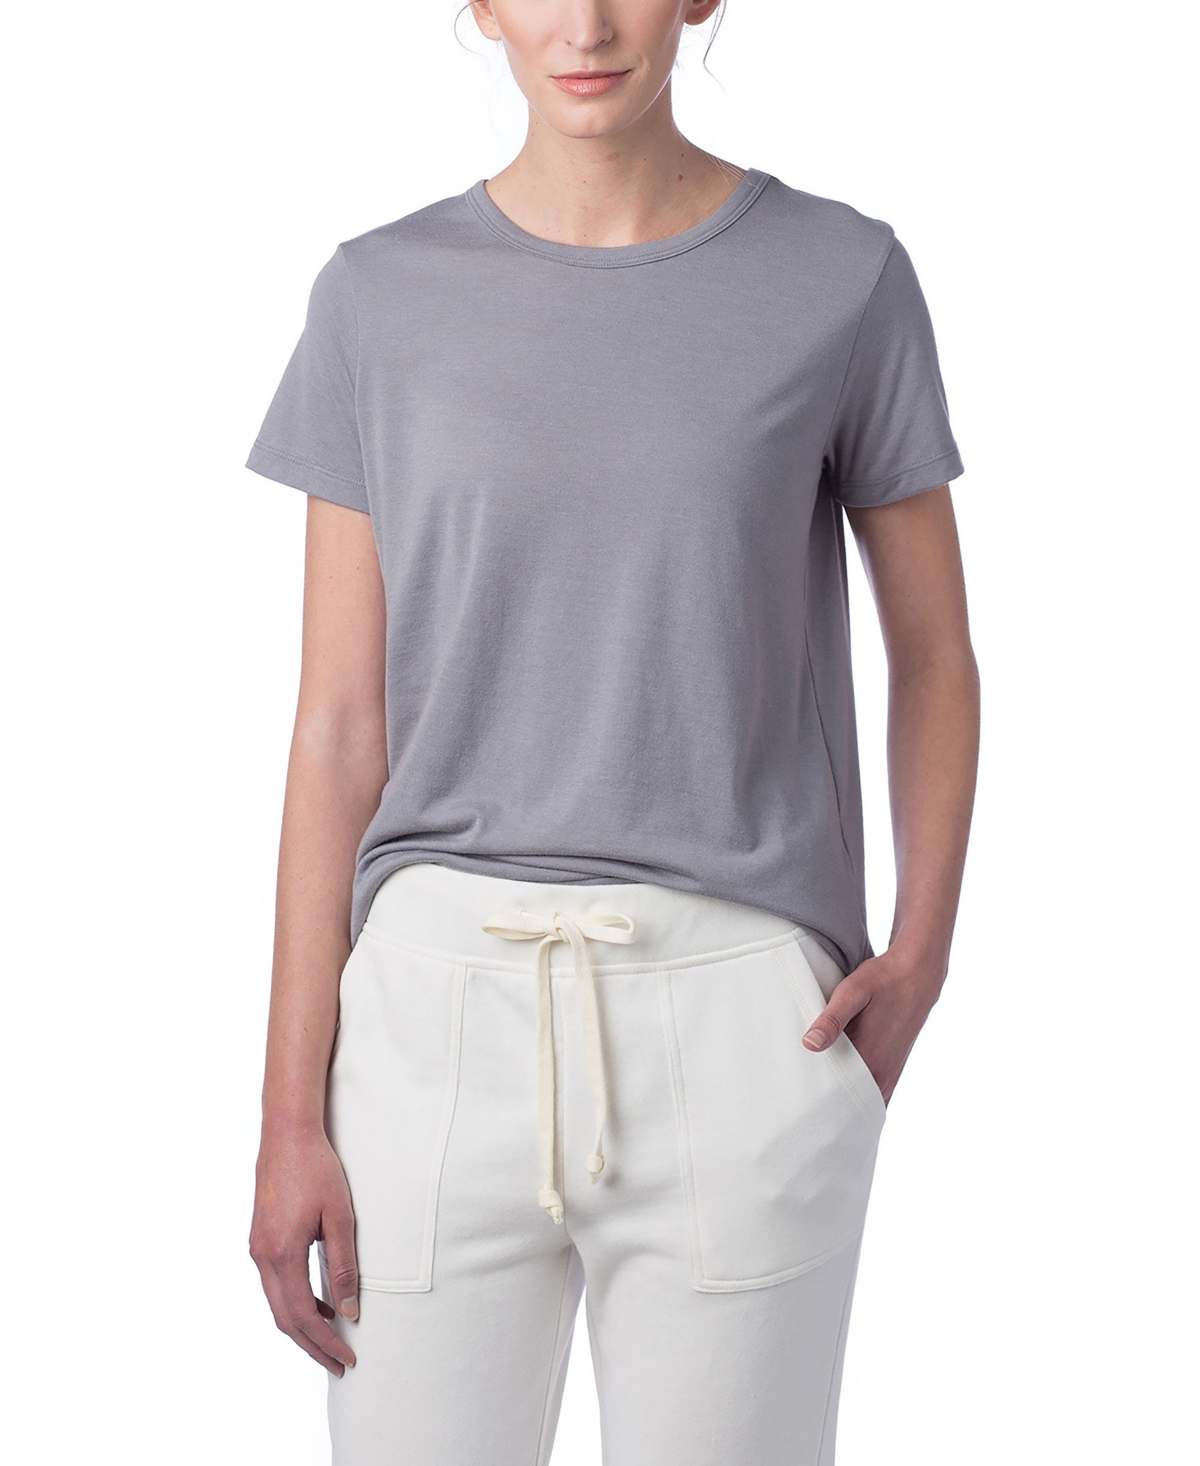 Women's Modal Tri-Blend Crew T-shirt - White